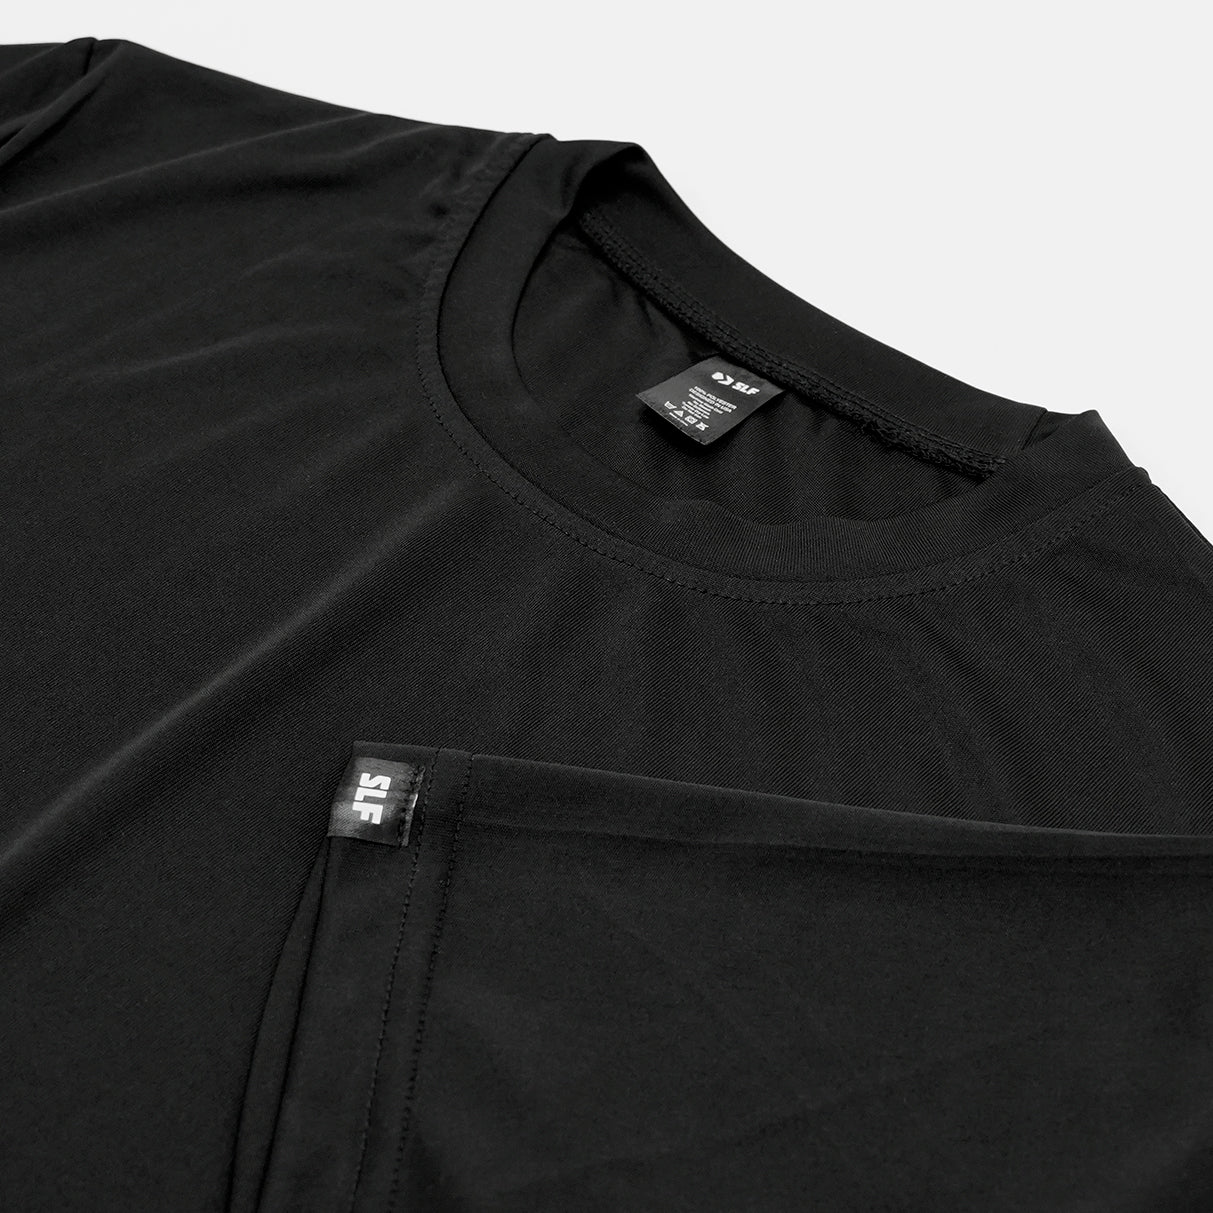 Basic Black Quick Dry Shirt - Big